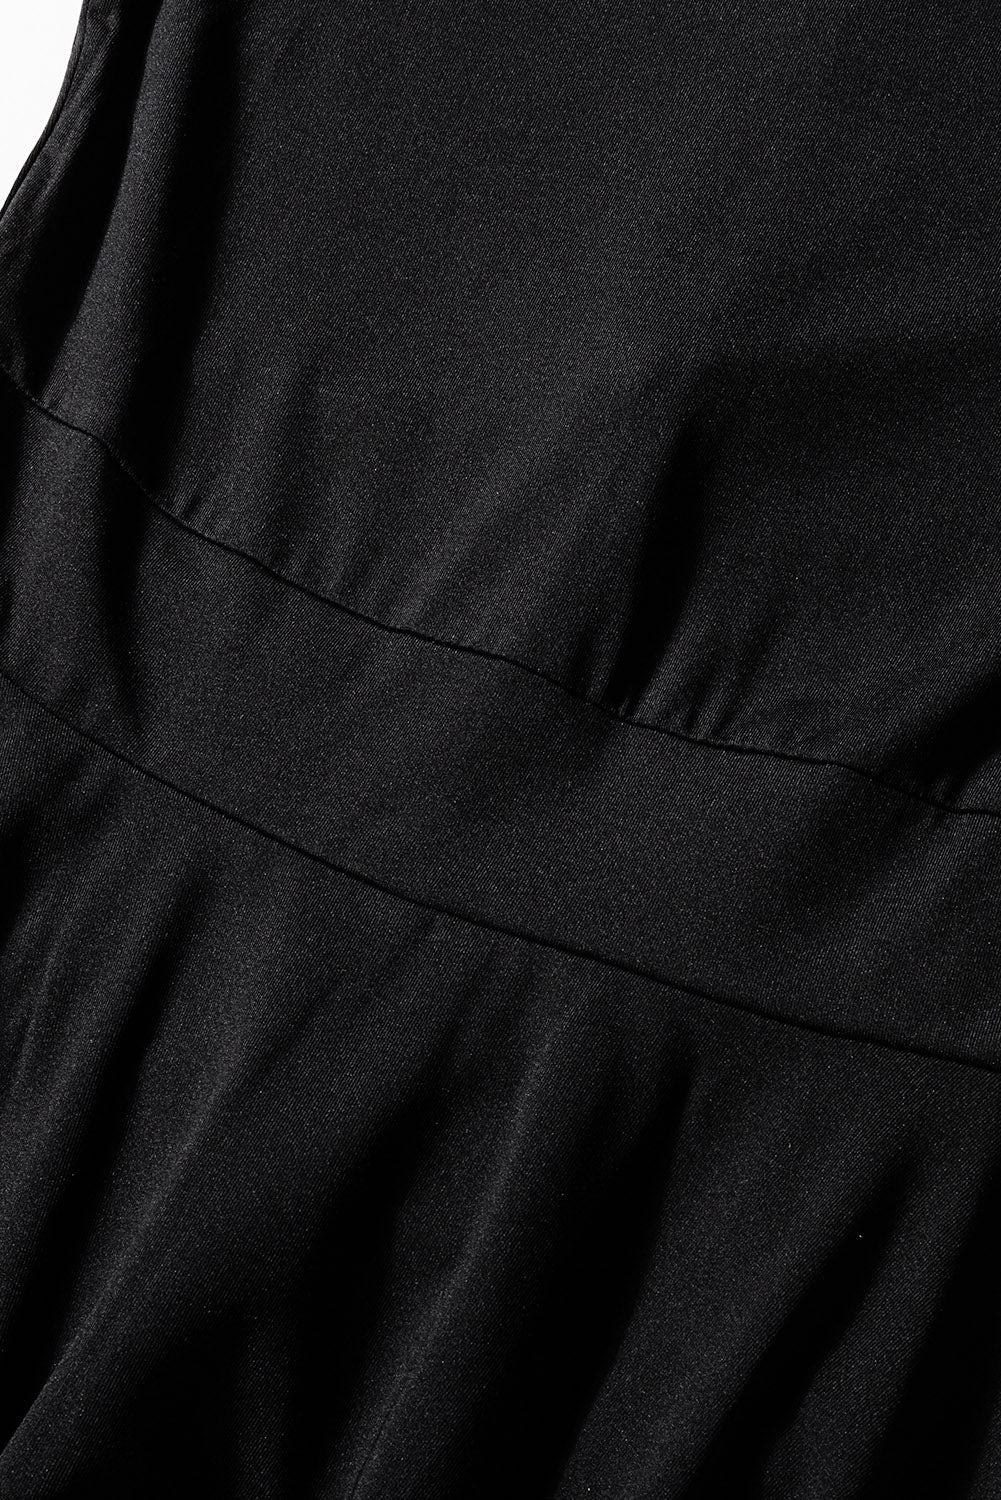 Long Sleeve V Neck Tiered Ruffle A-line Mini Dress